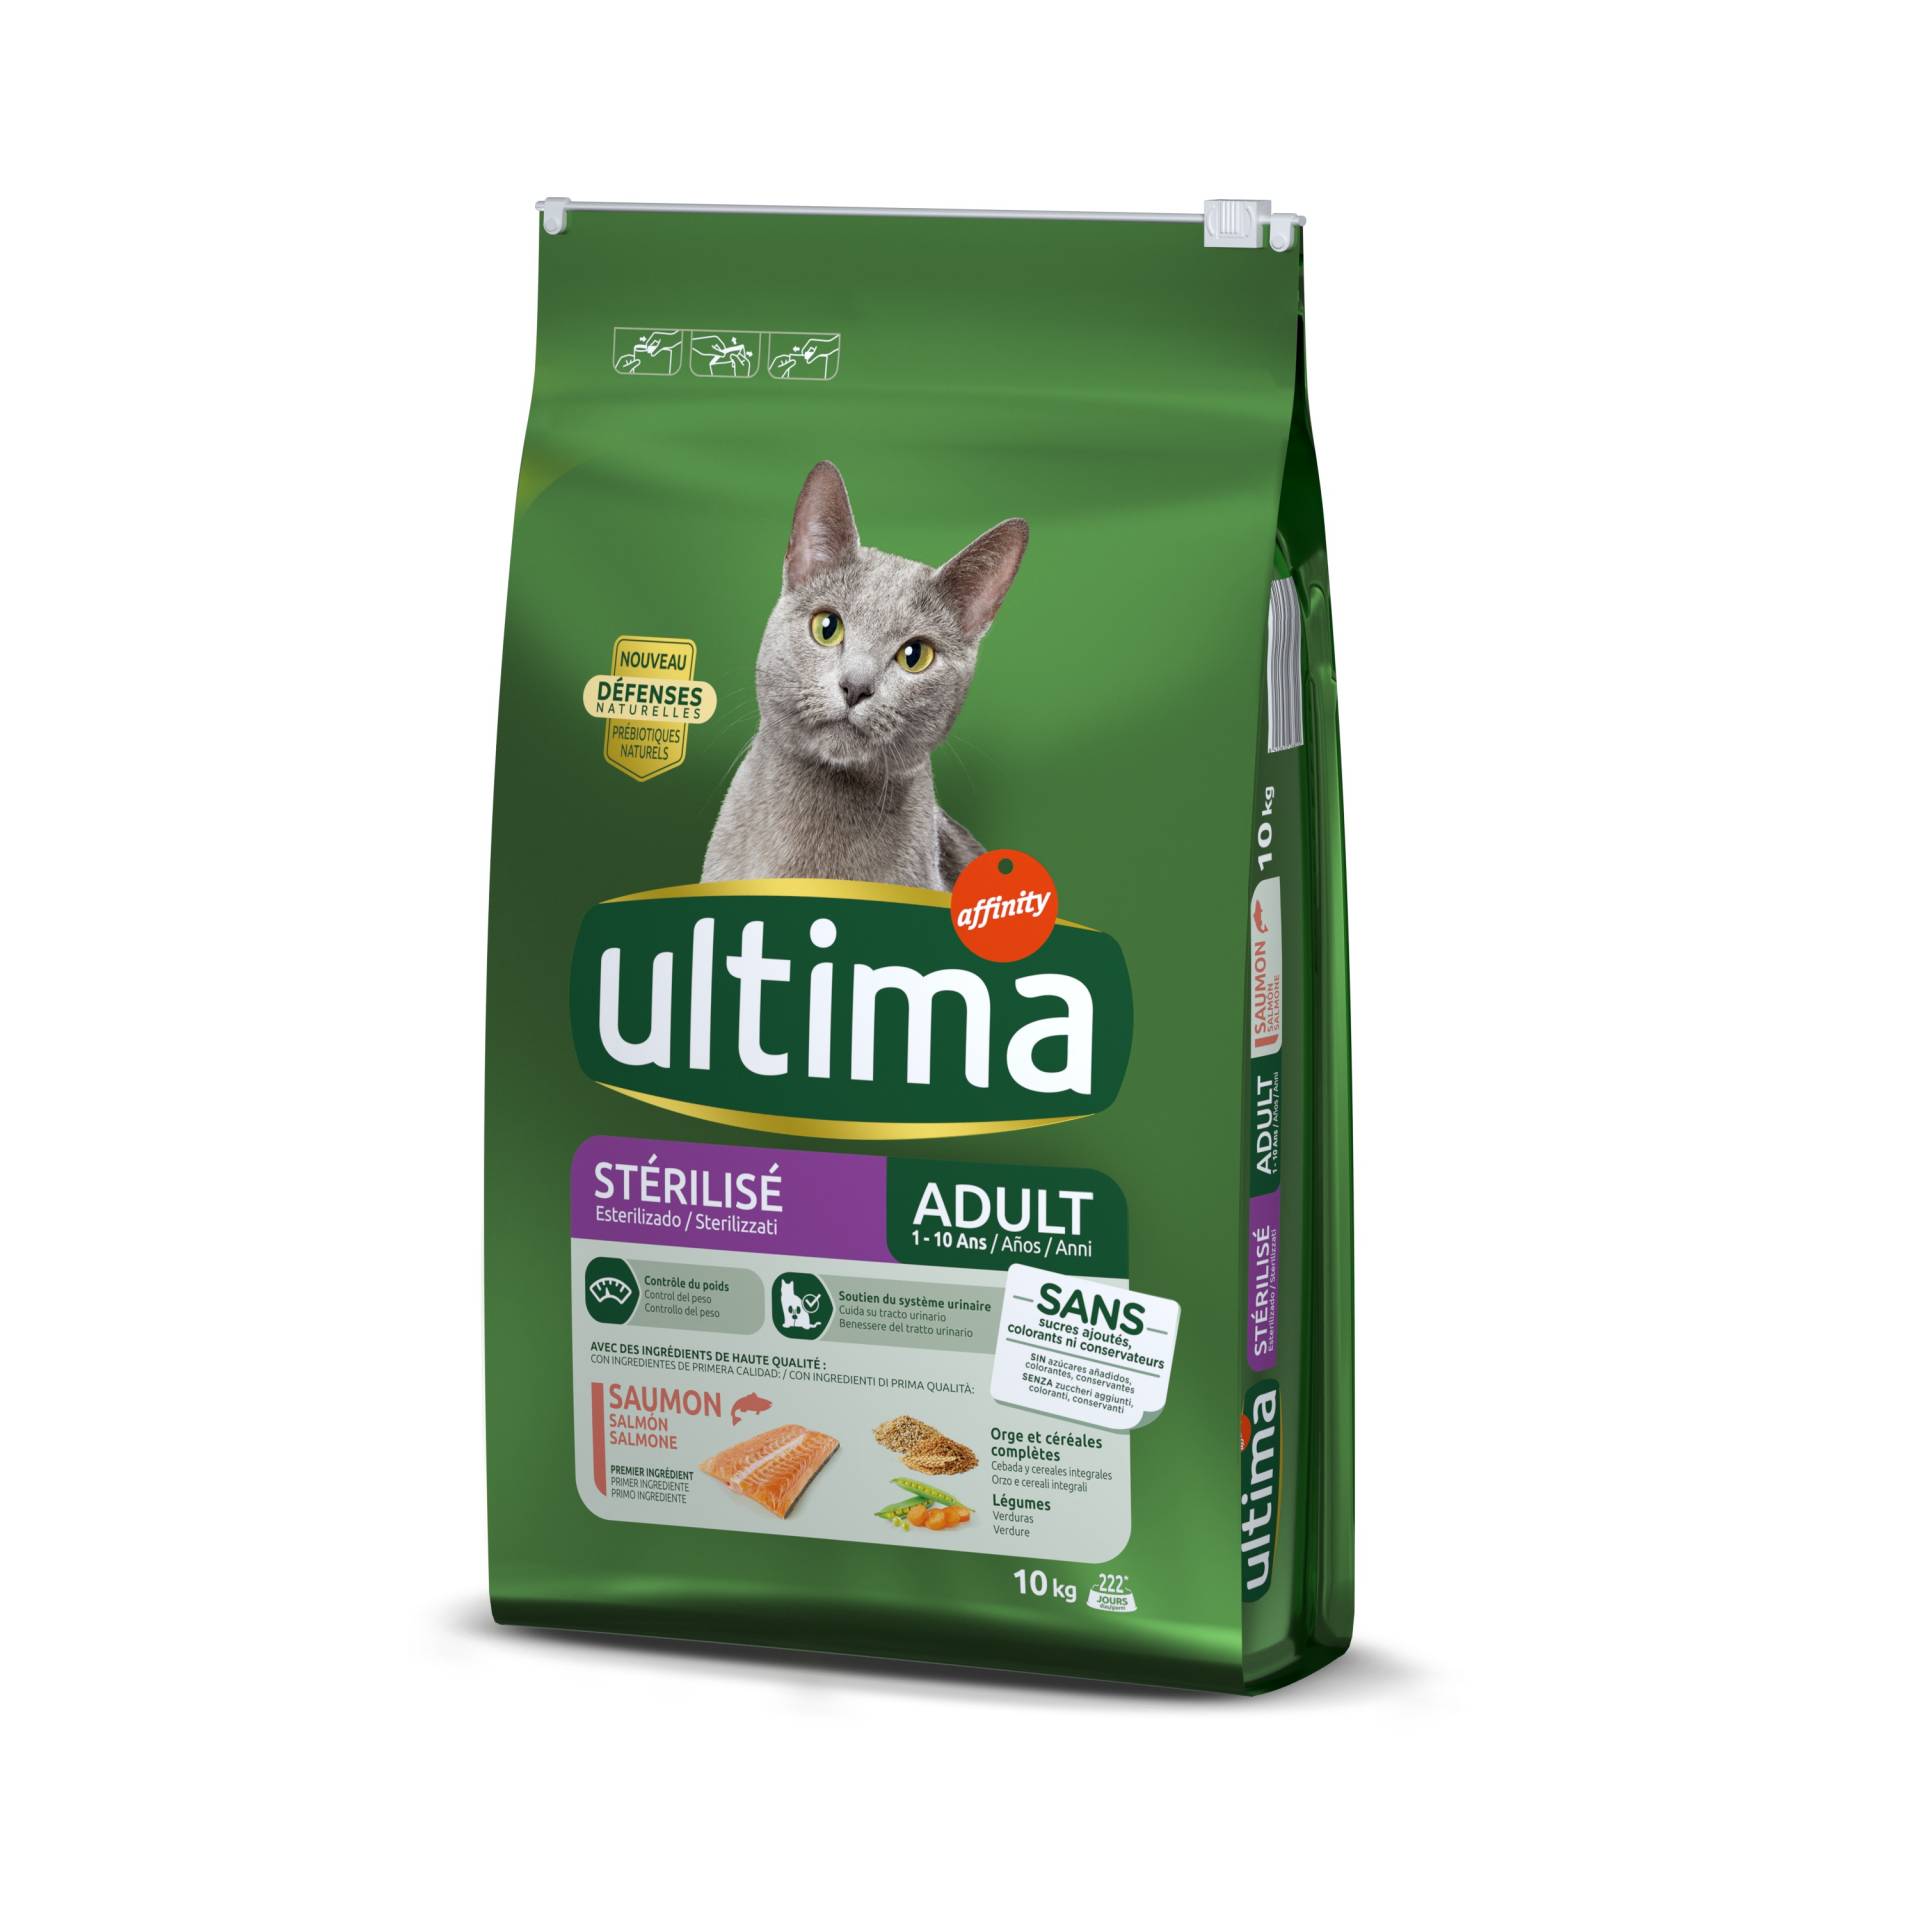 Ultima Cat Sterilized Lachs & Gerste - Sparpaket: 2 x 10 kg von Affinity Ultima